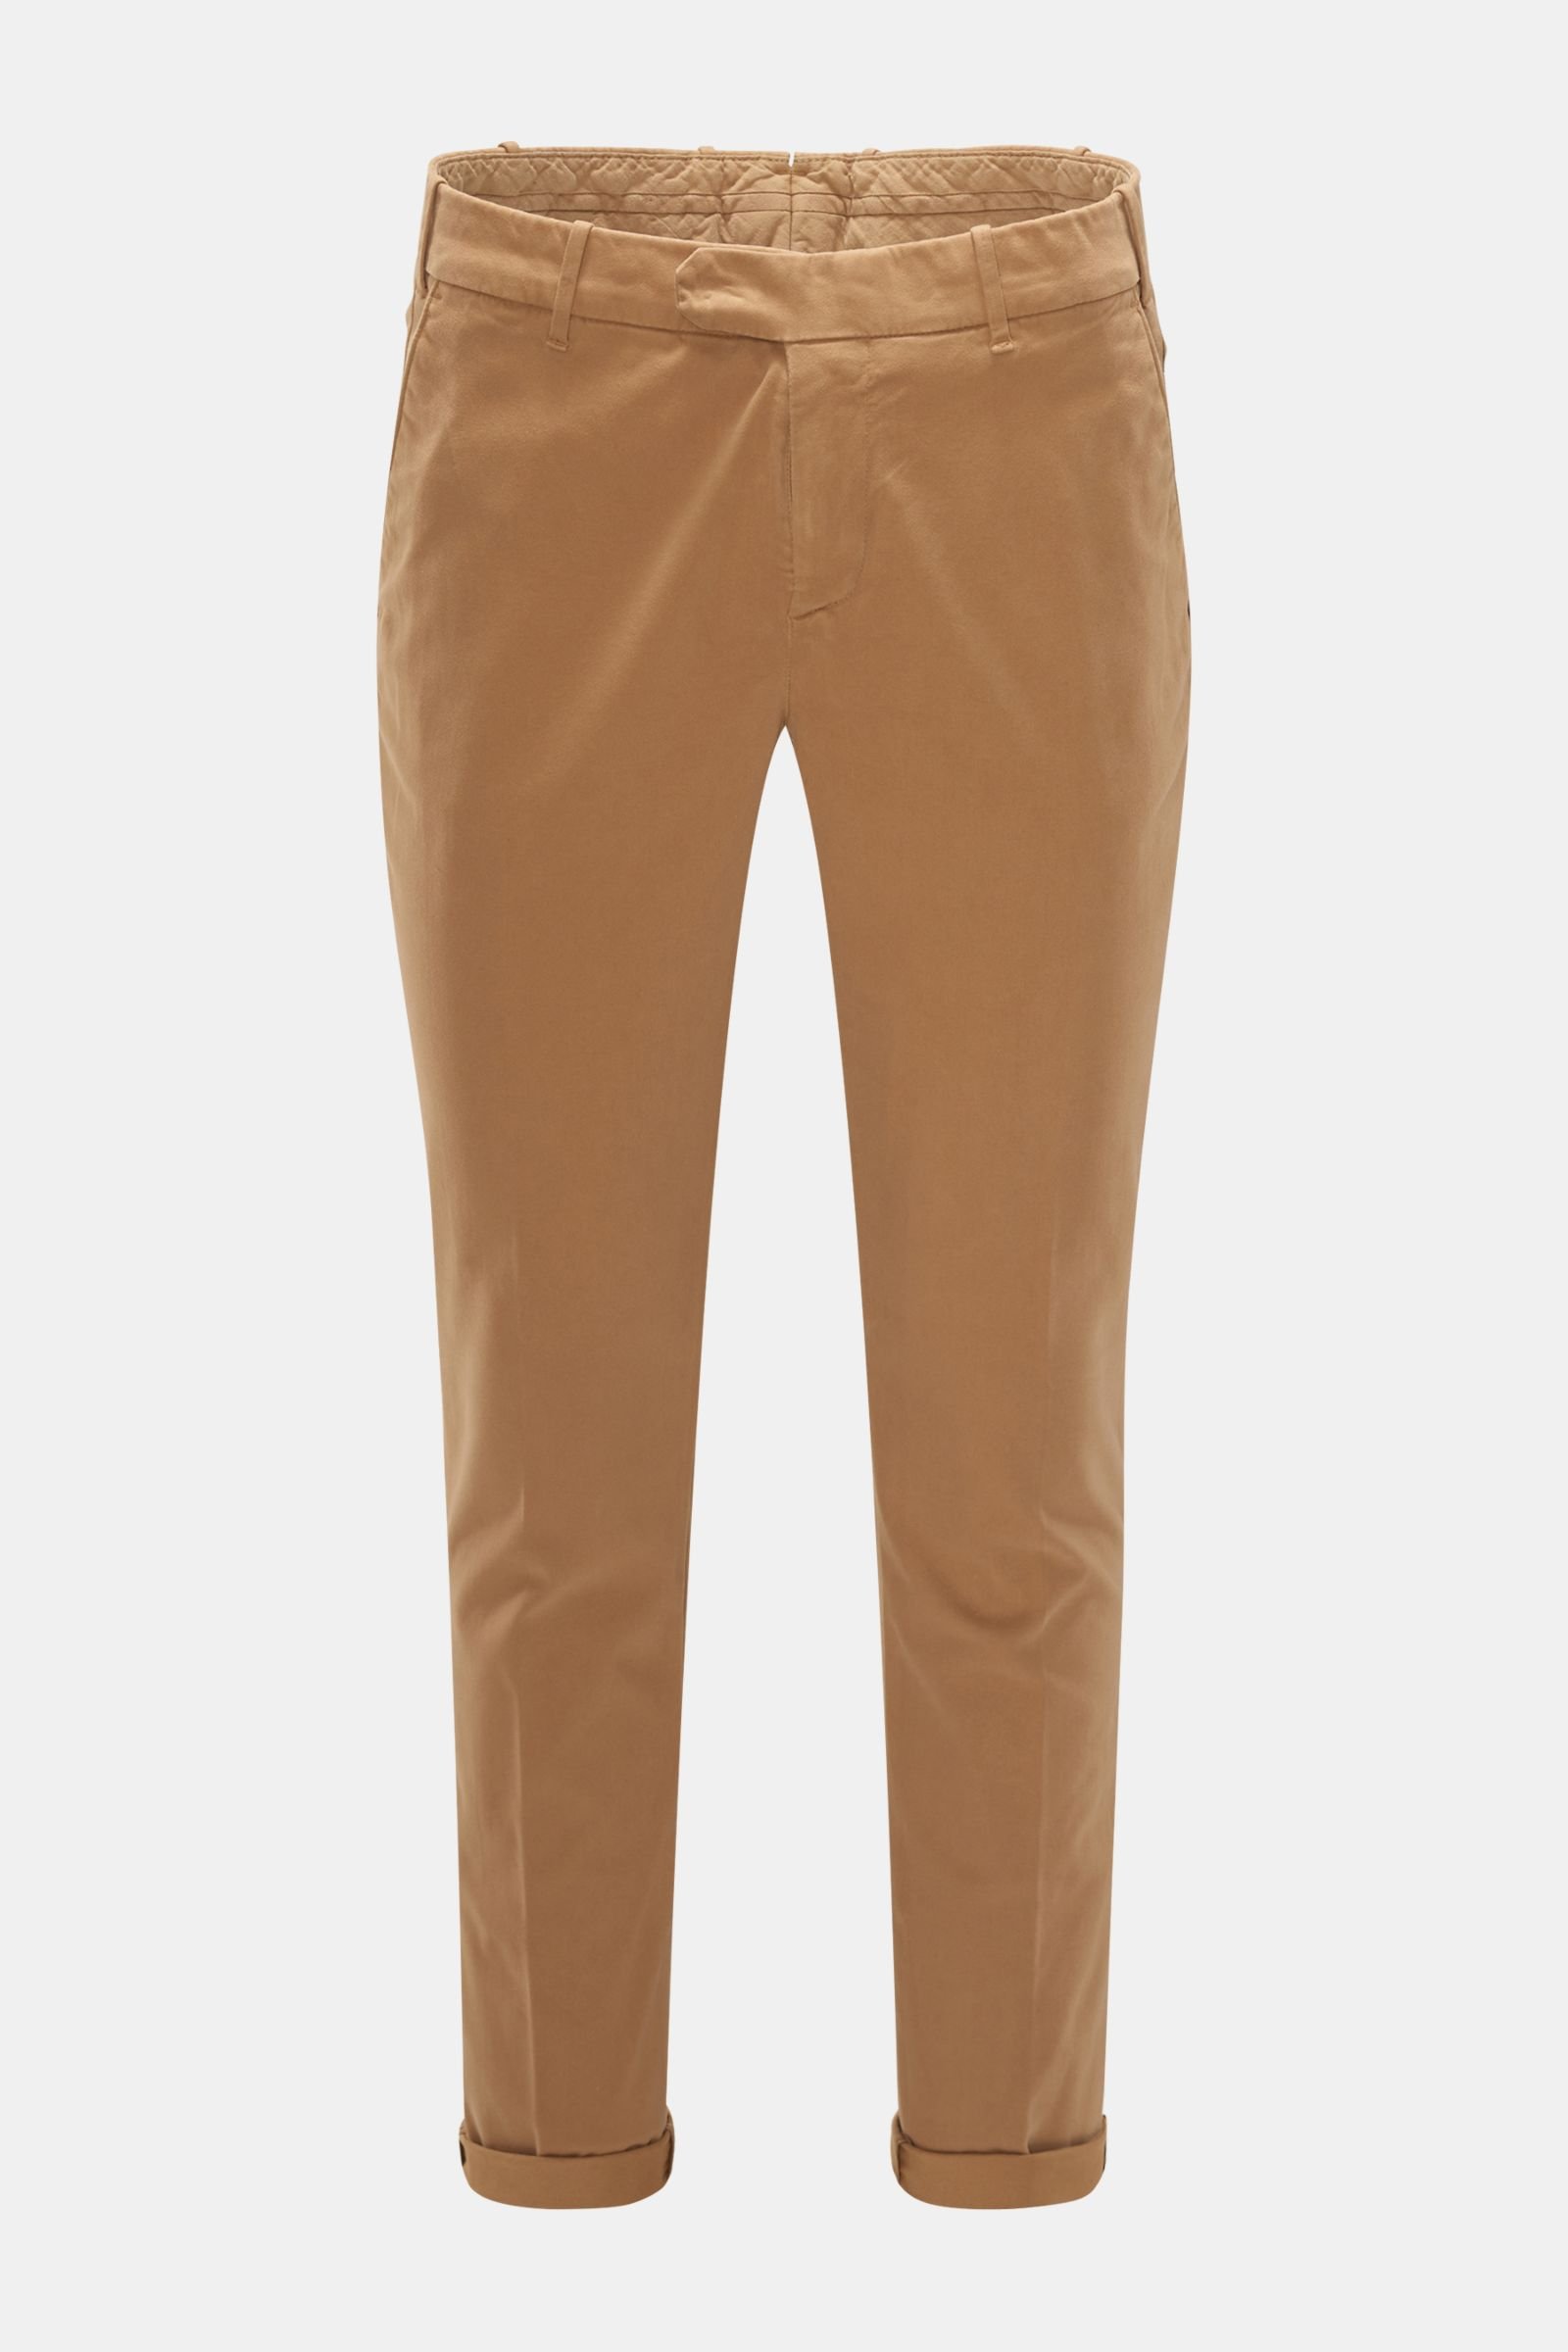 Fustian trousers brown